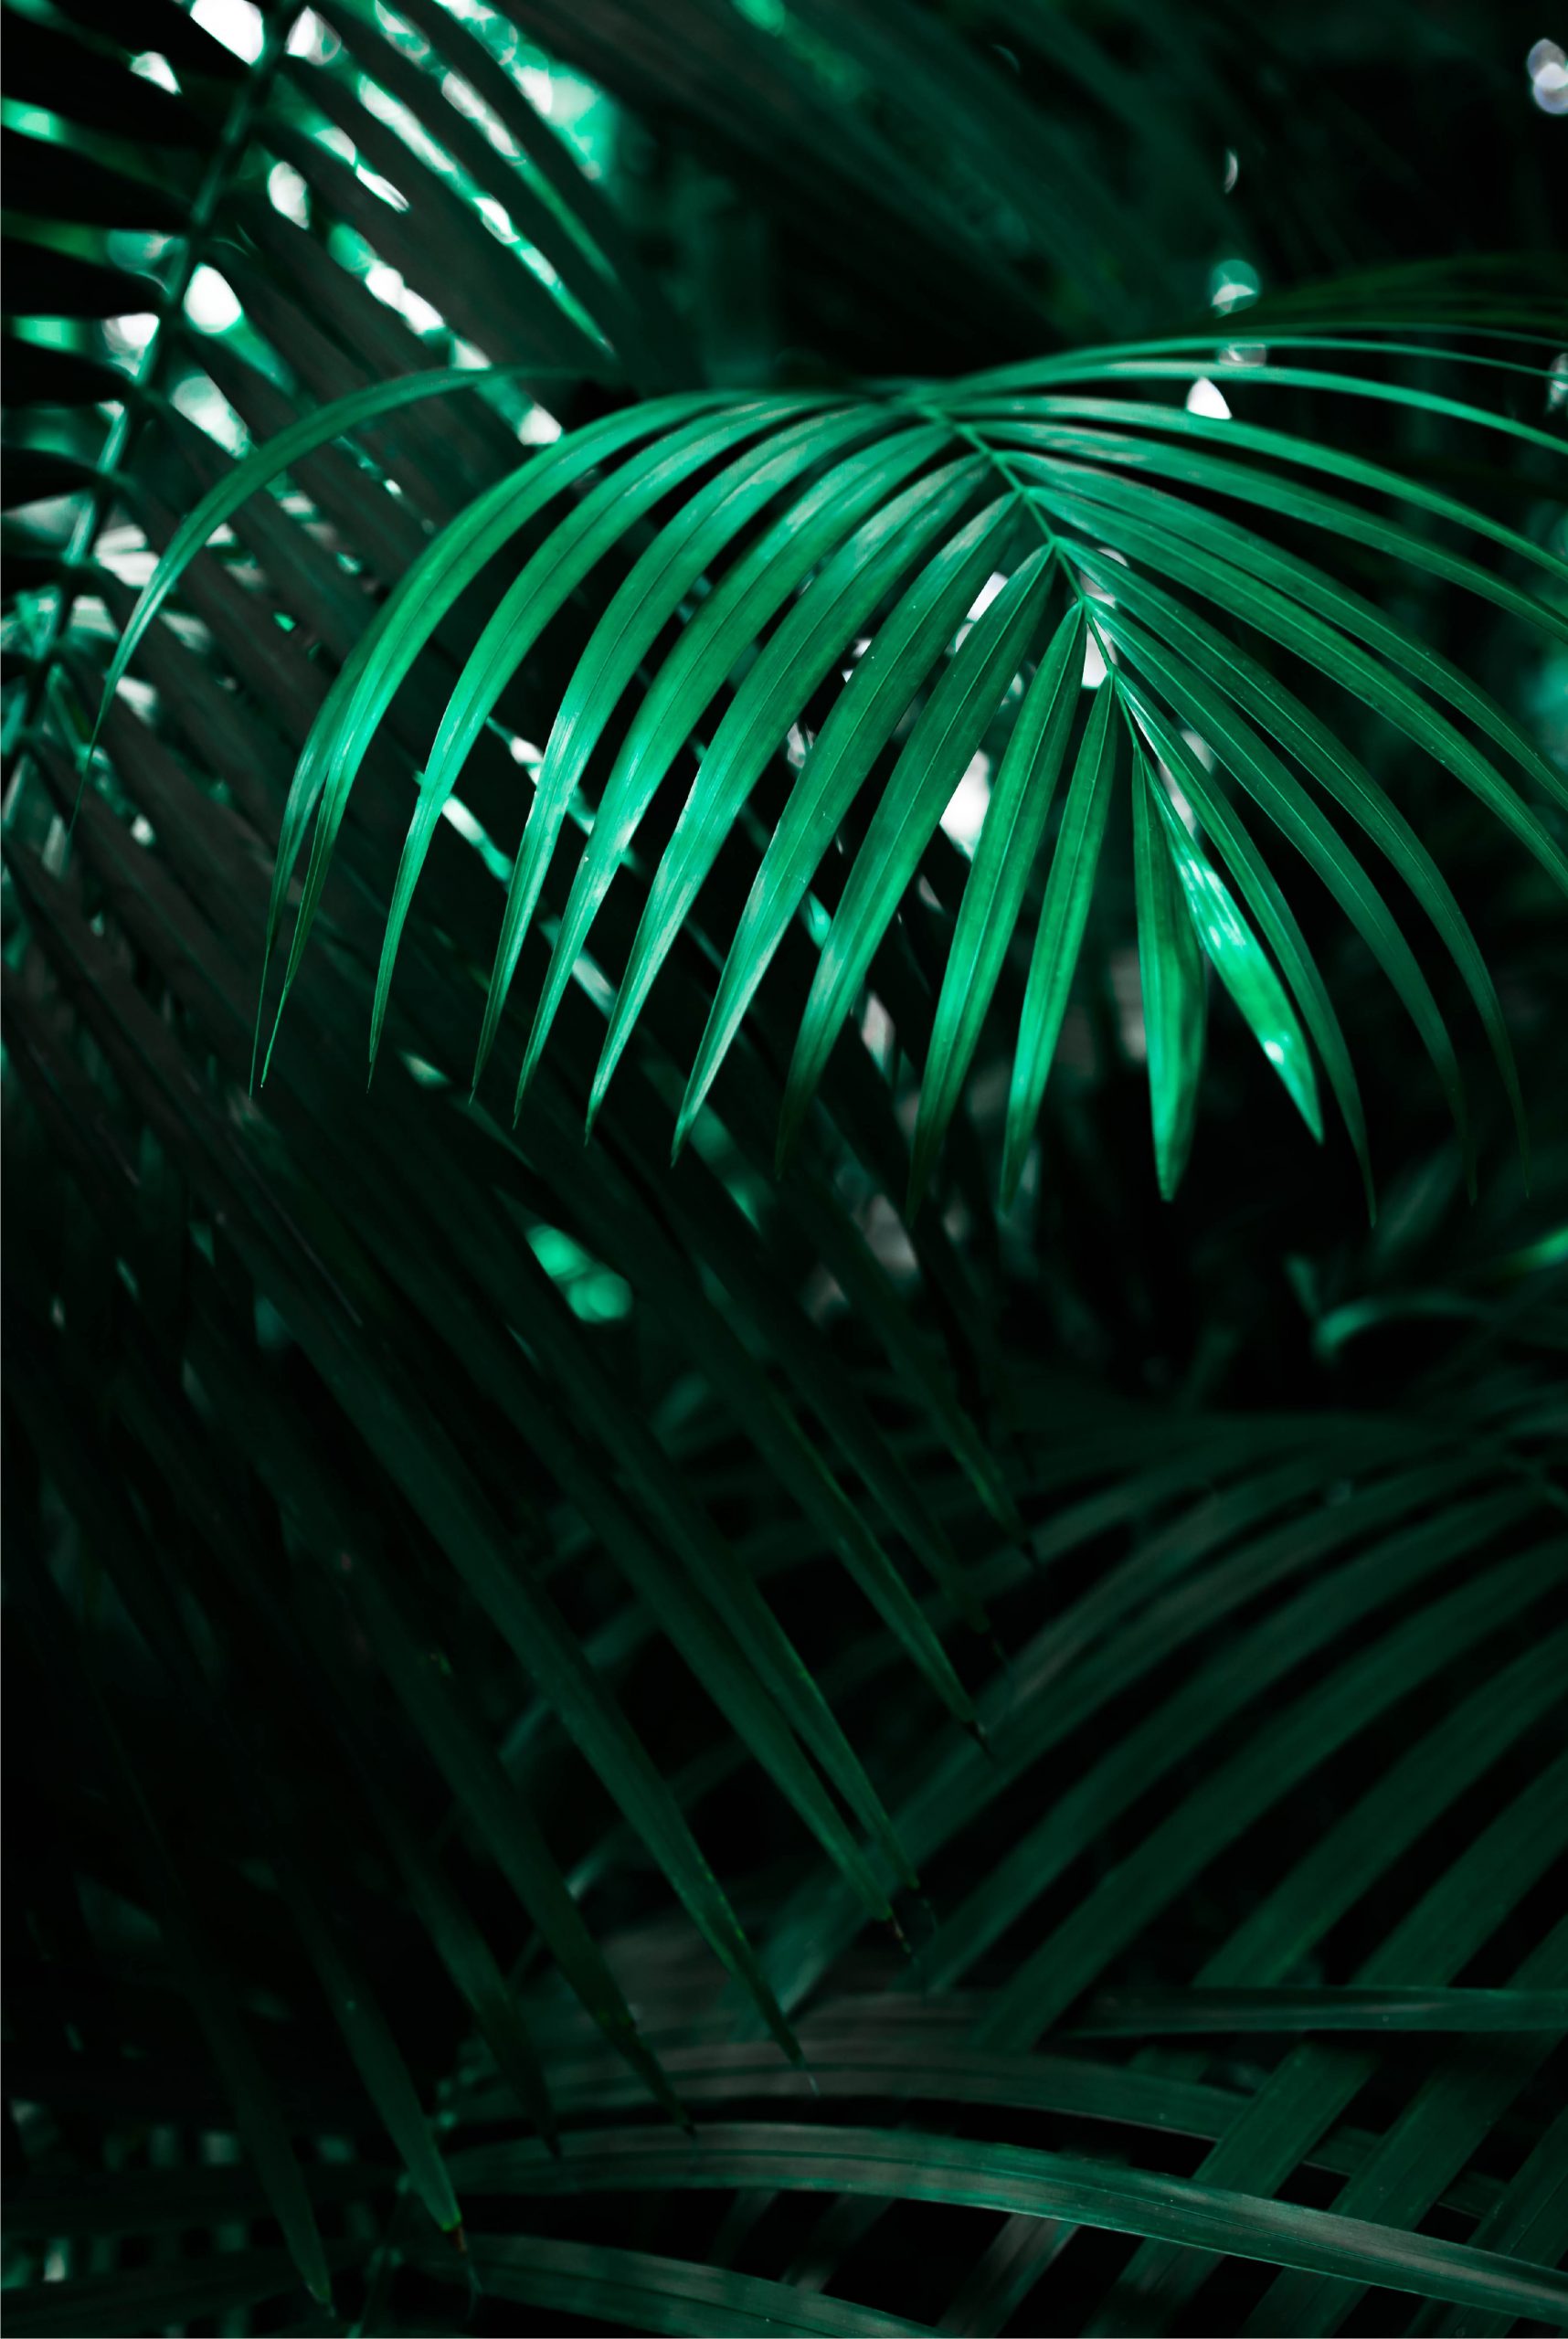 Vibrant green leaves poster